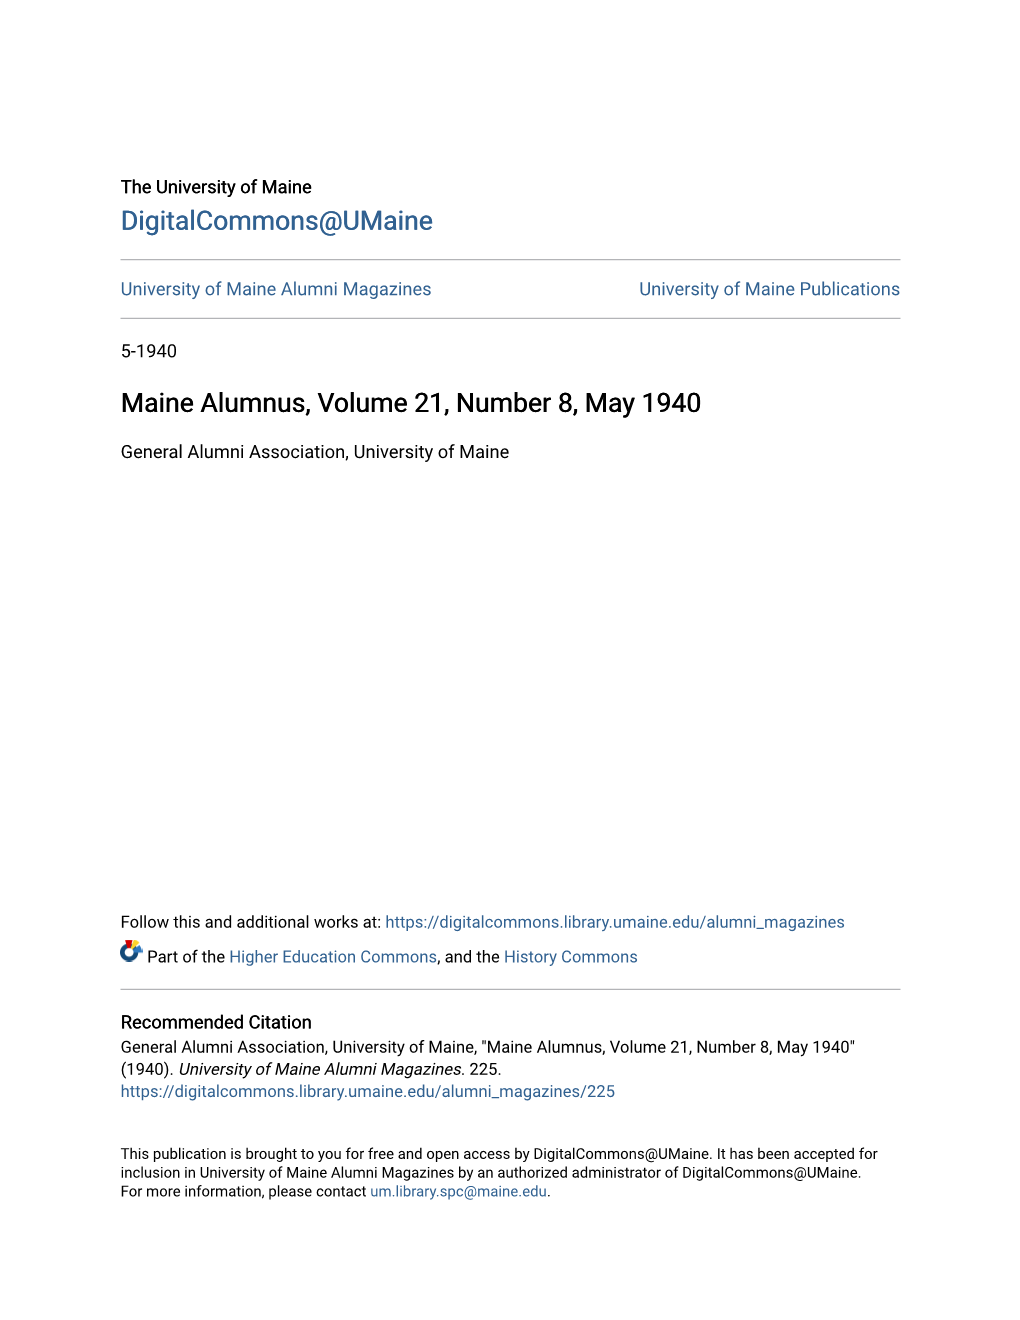 Maine Alumnus, Volume 21, Number 8, May 1940